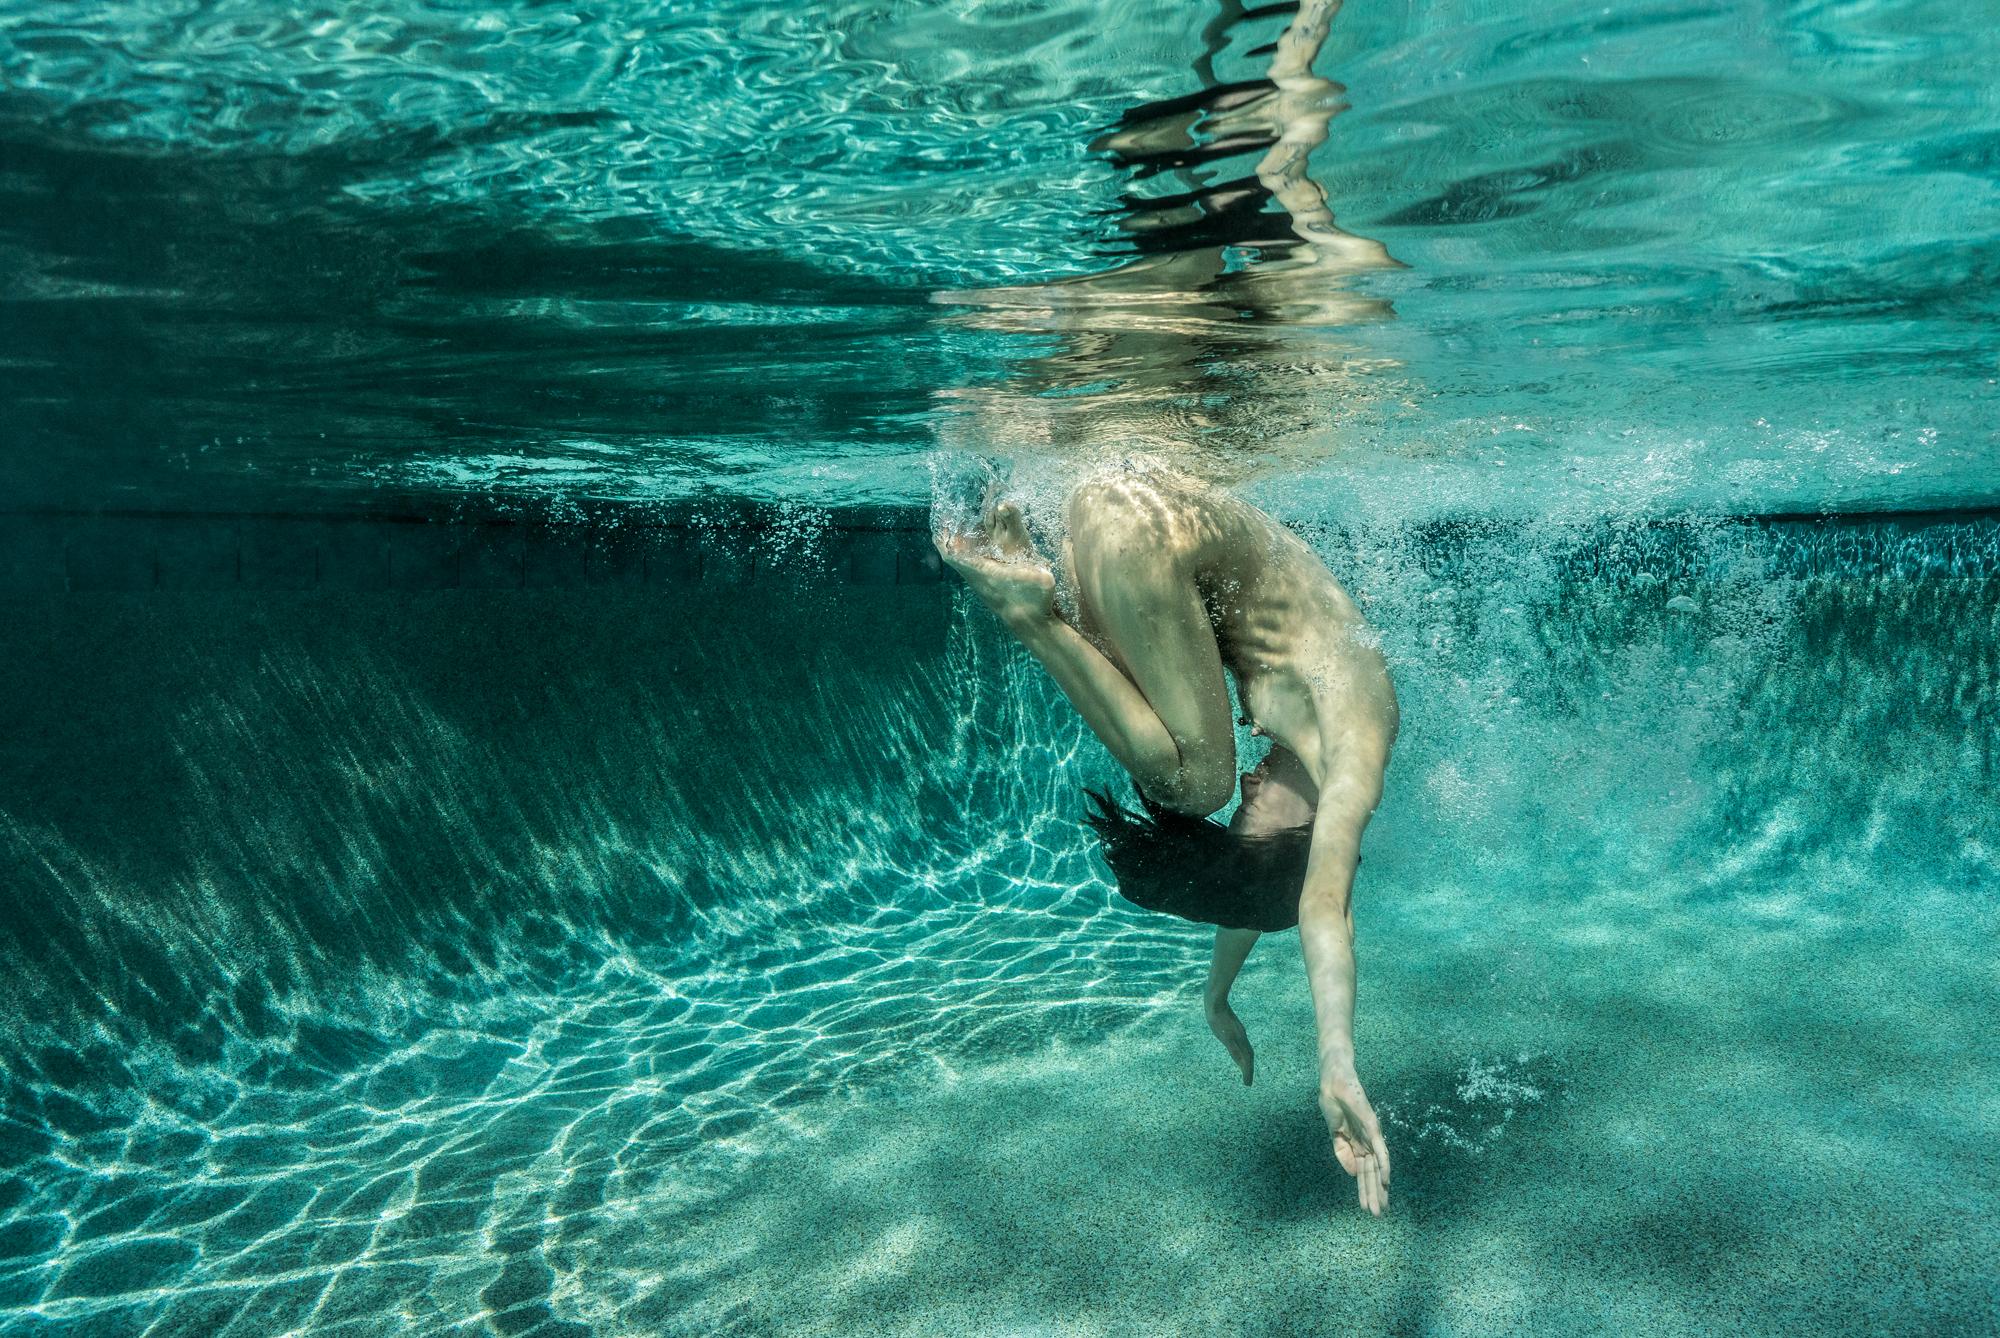 Green Roll II  - underwater nude photograph - print on aluminum 24x36"